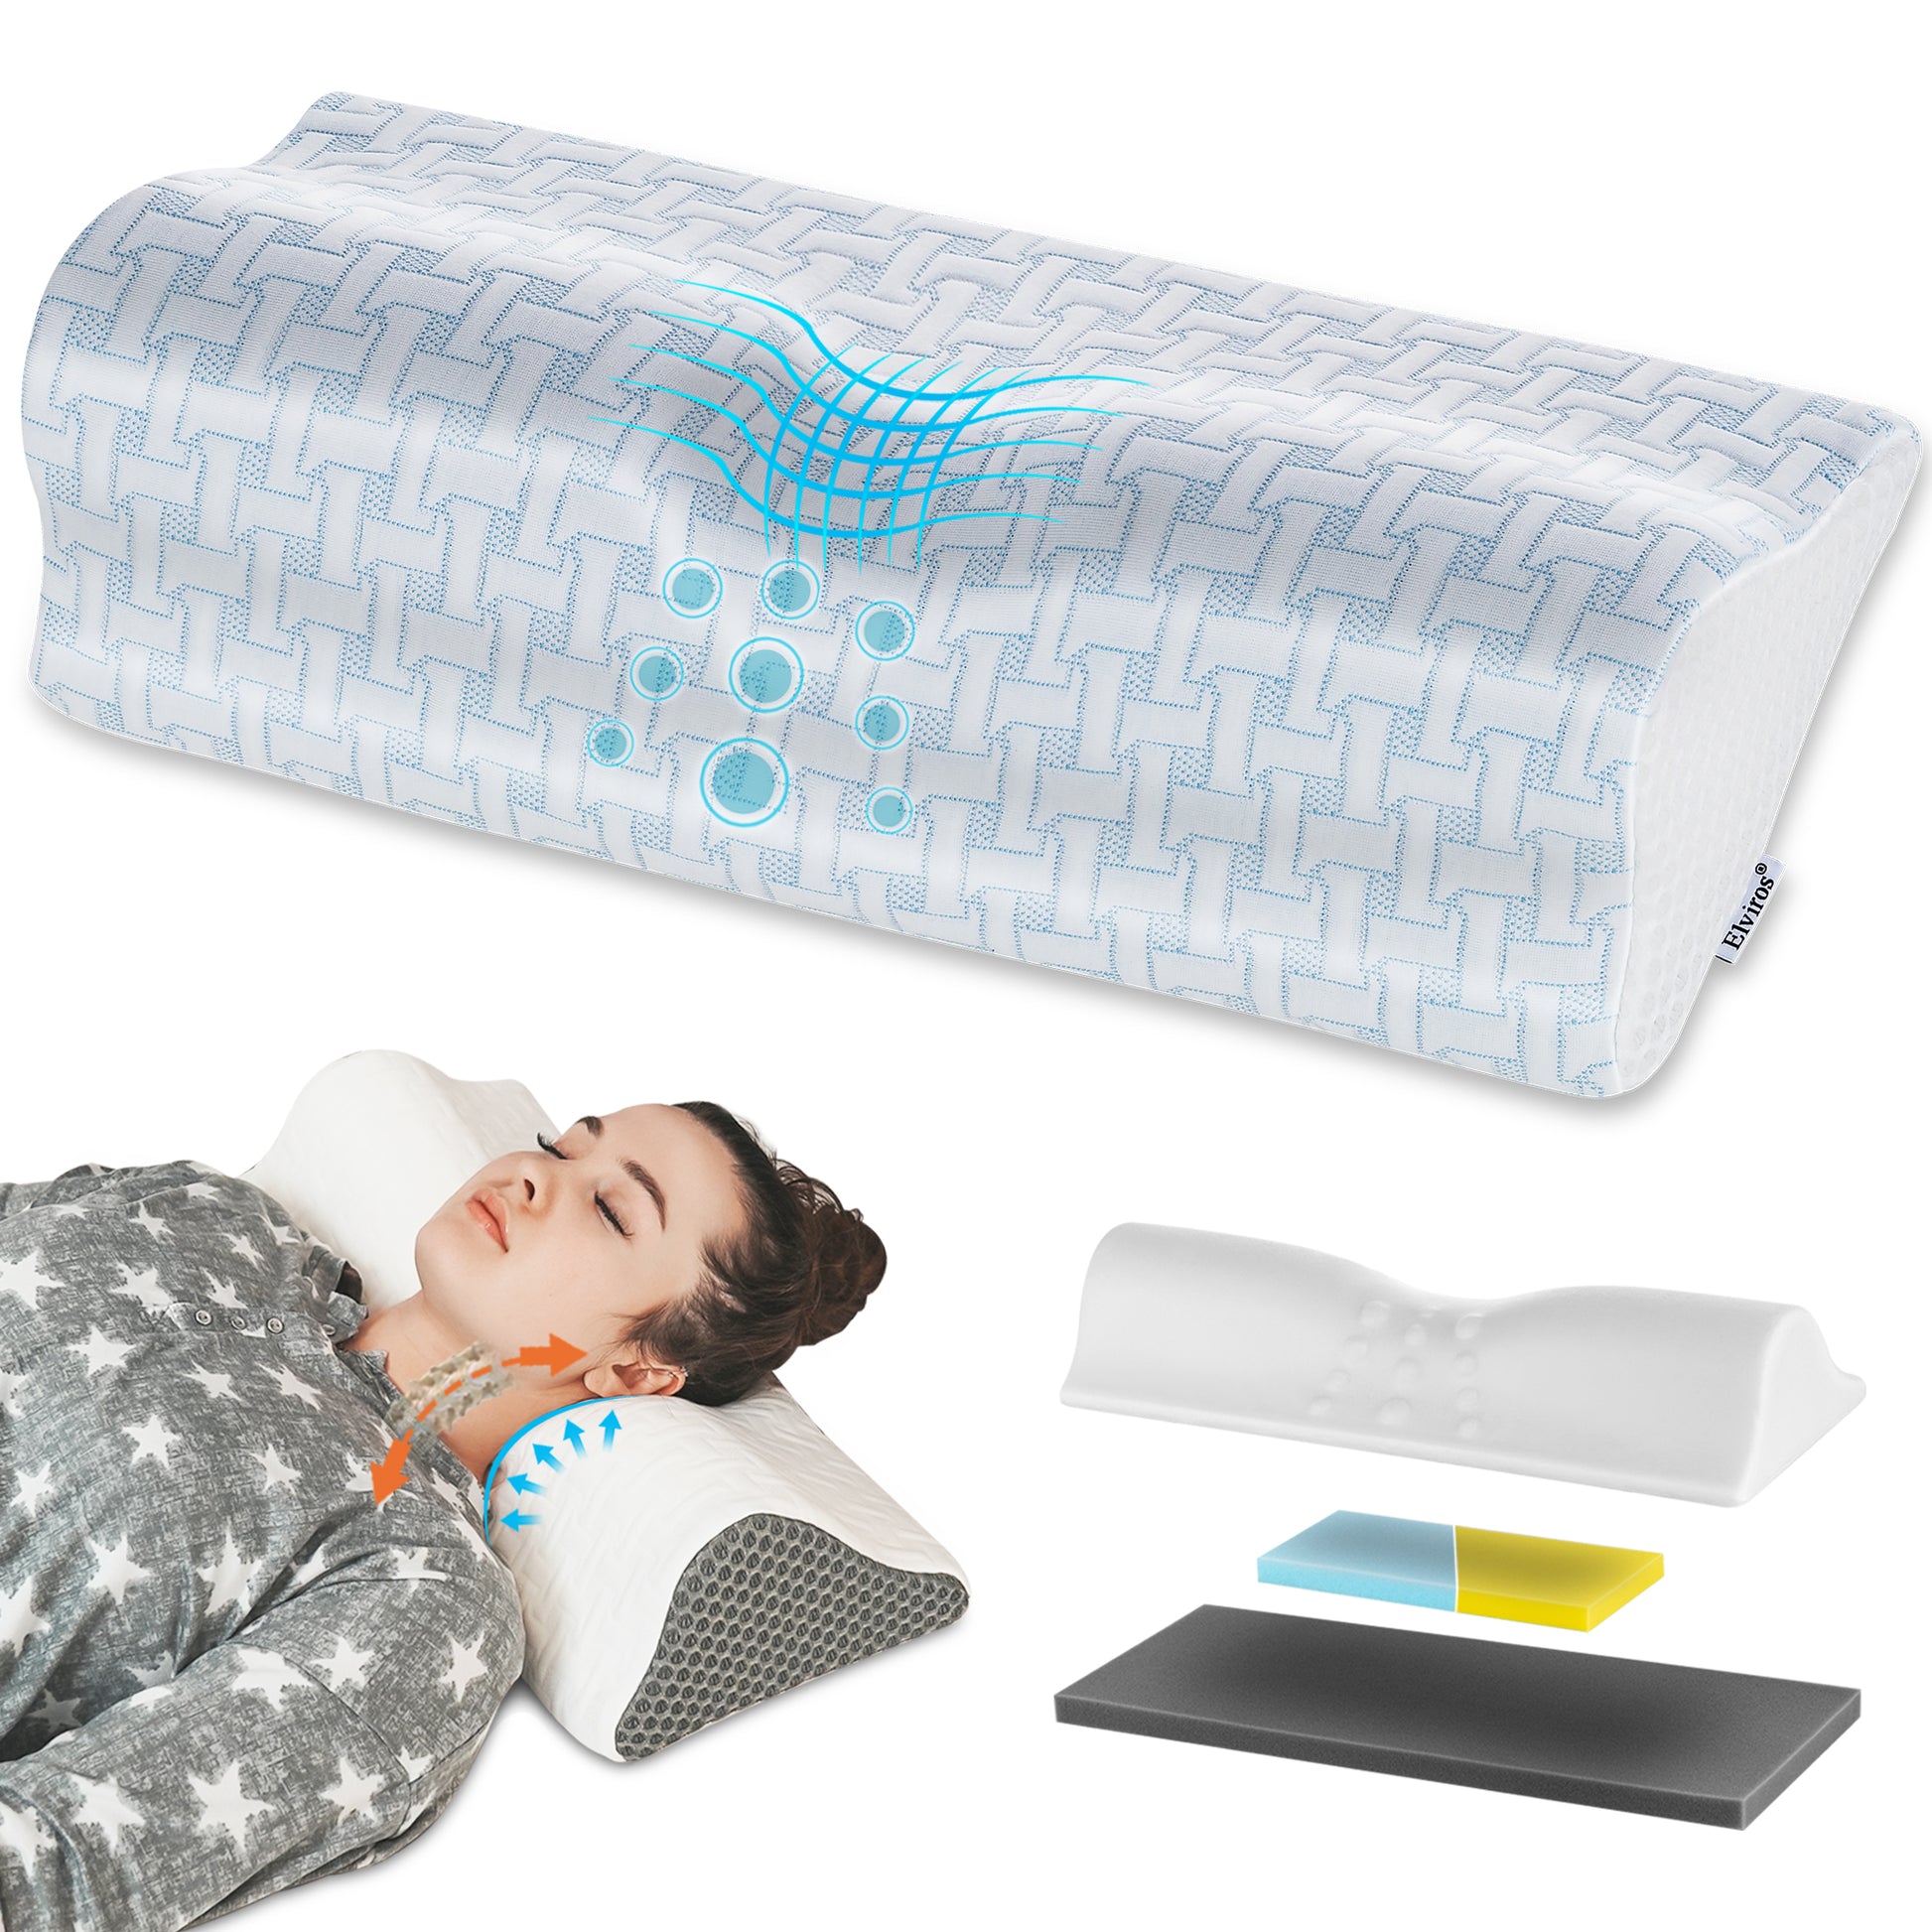 Elviros Lumbar Support Pillow for Sleeping, Adjustable Memory Foam